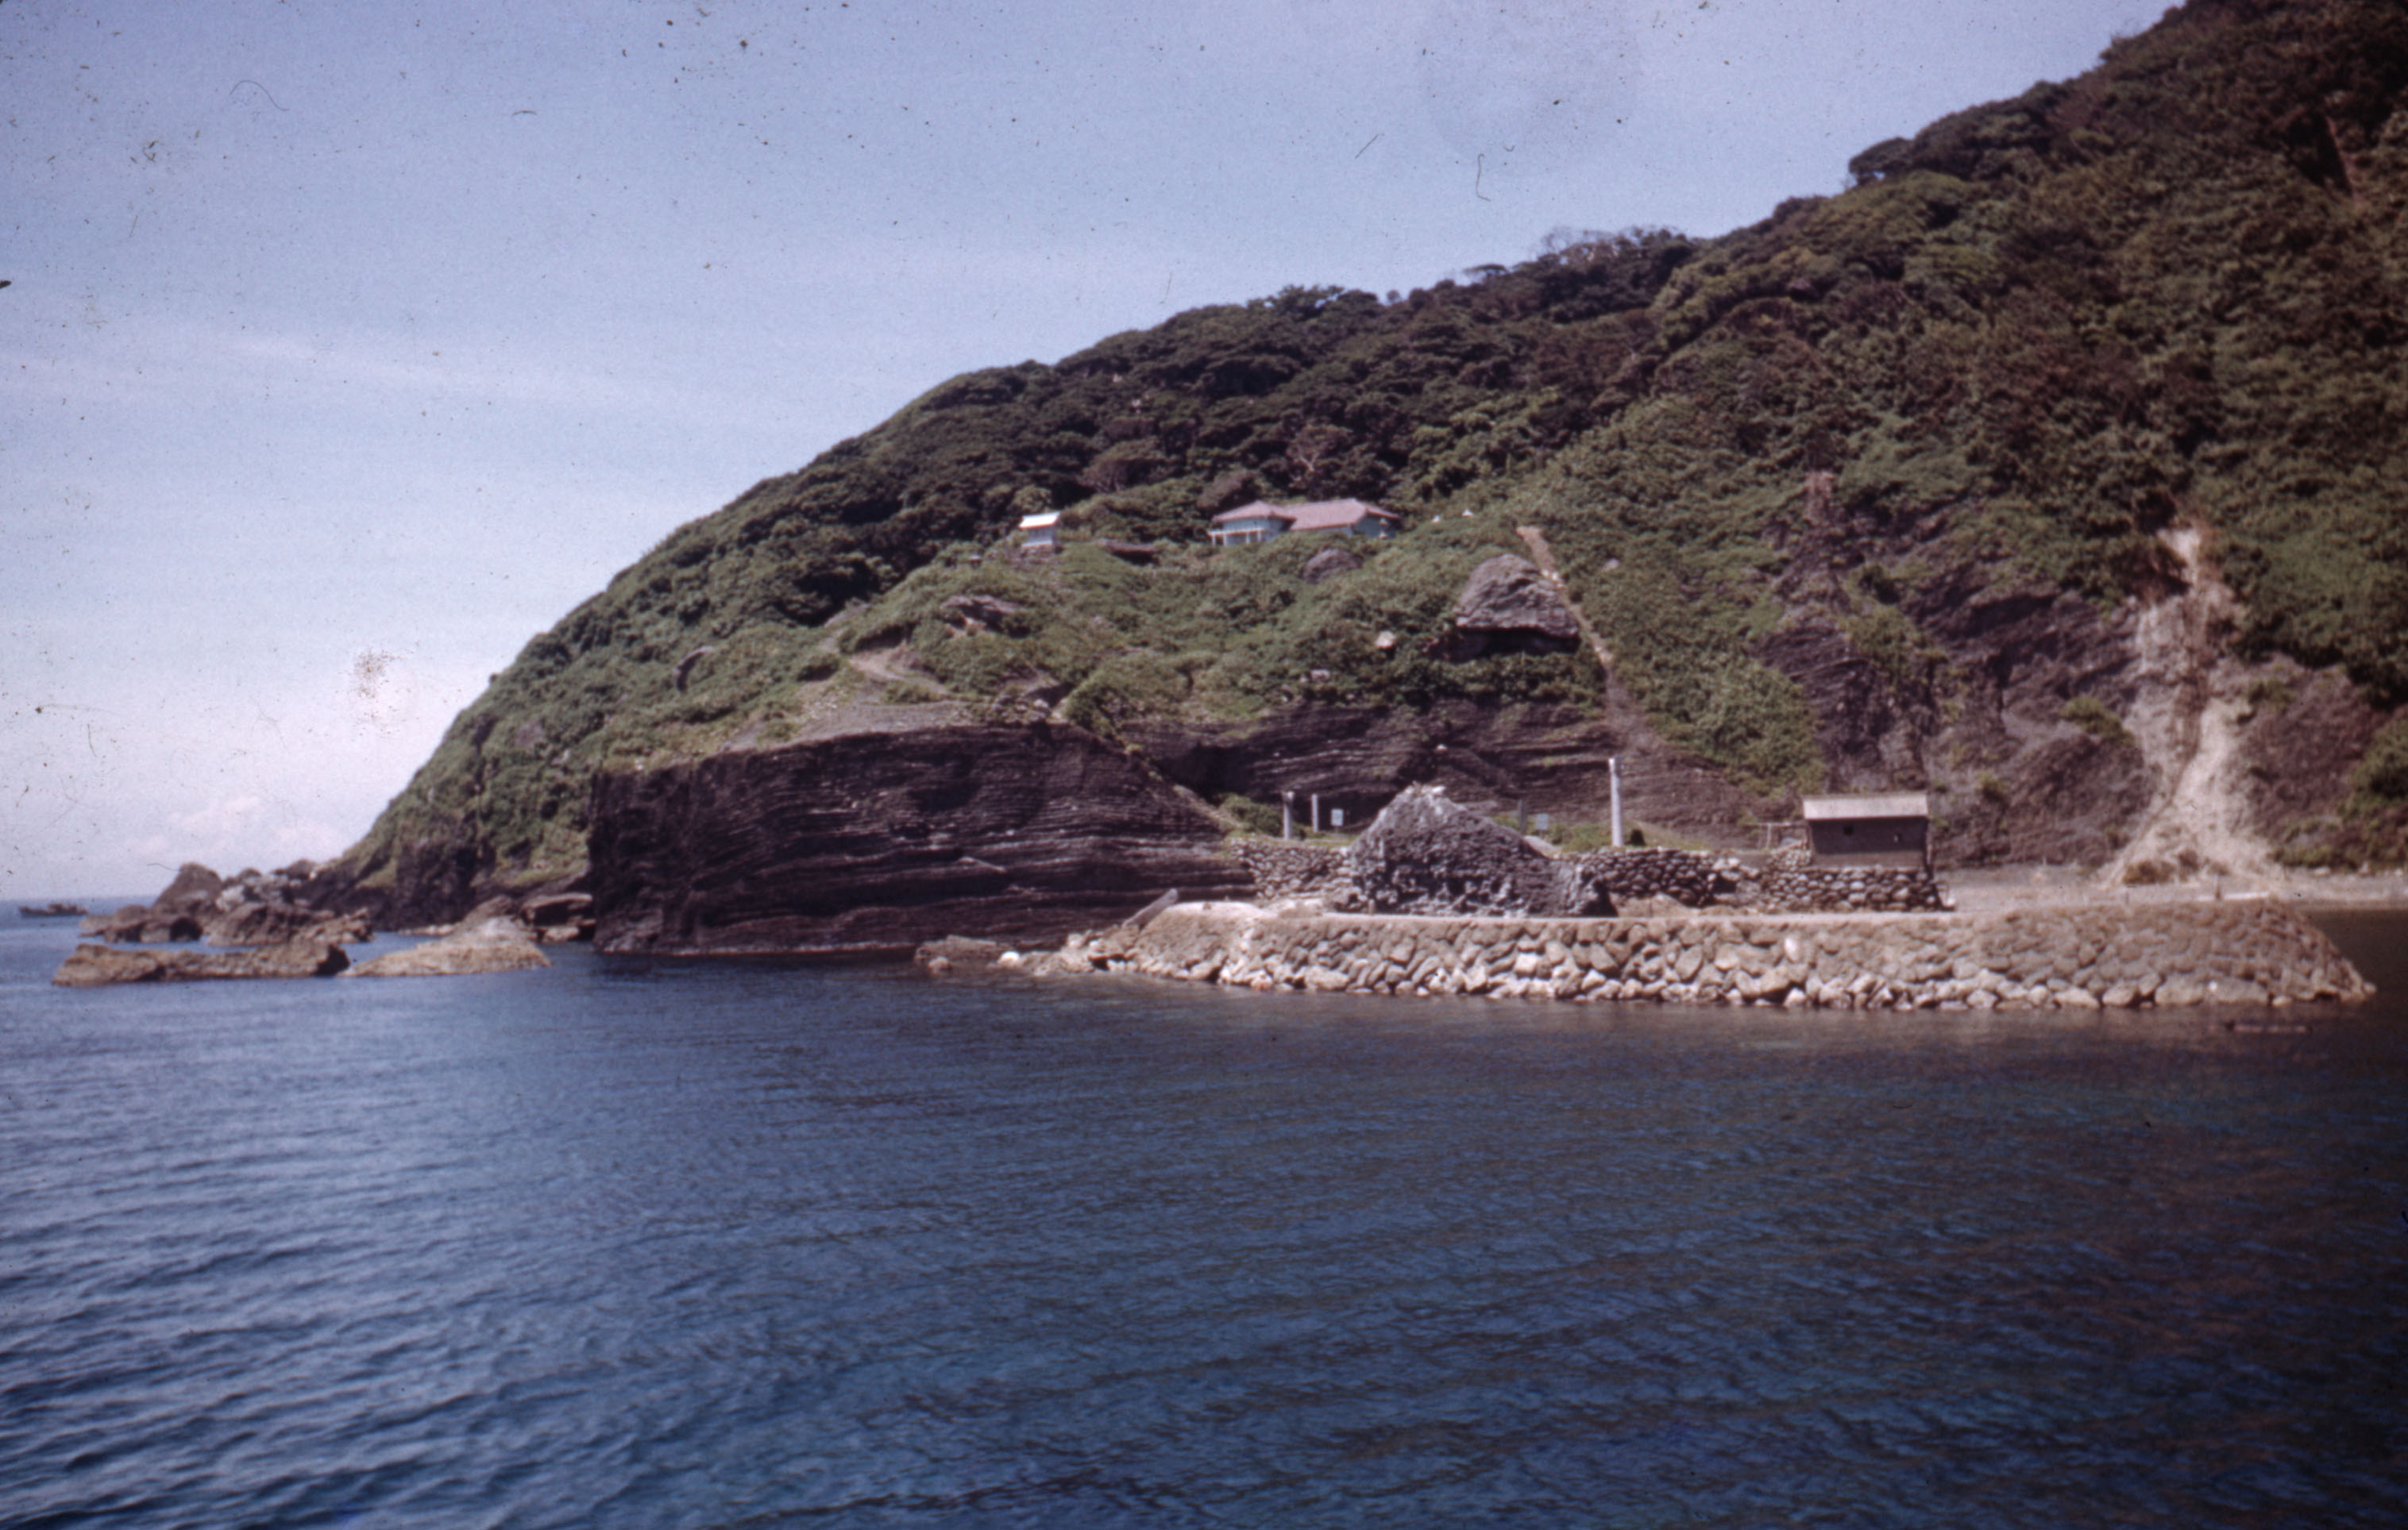 Okinoshima